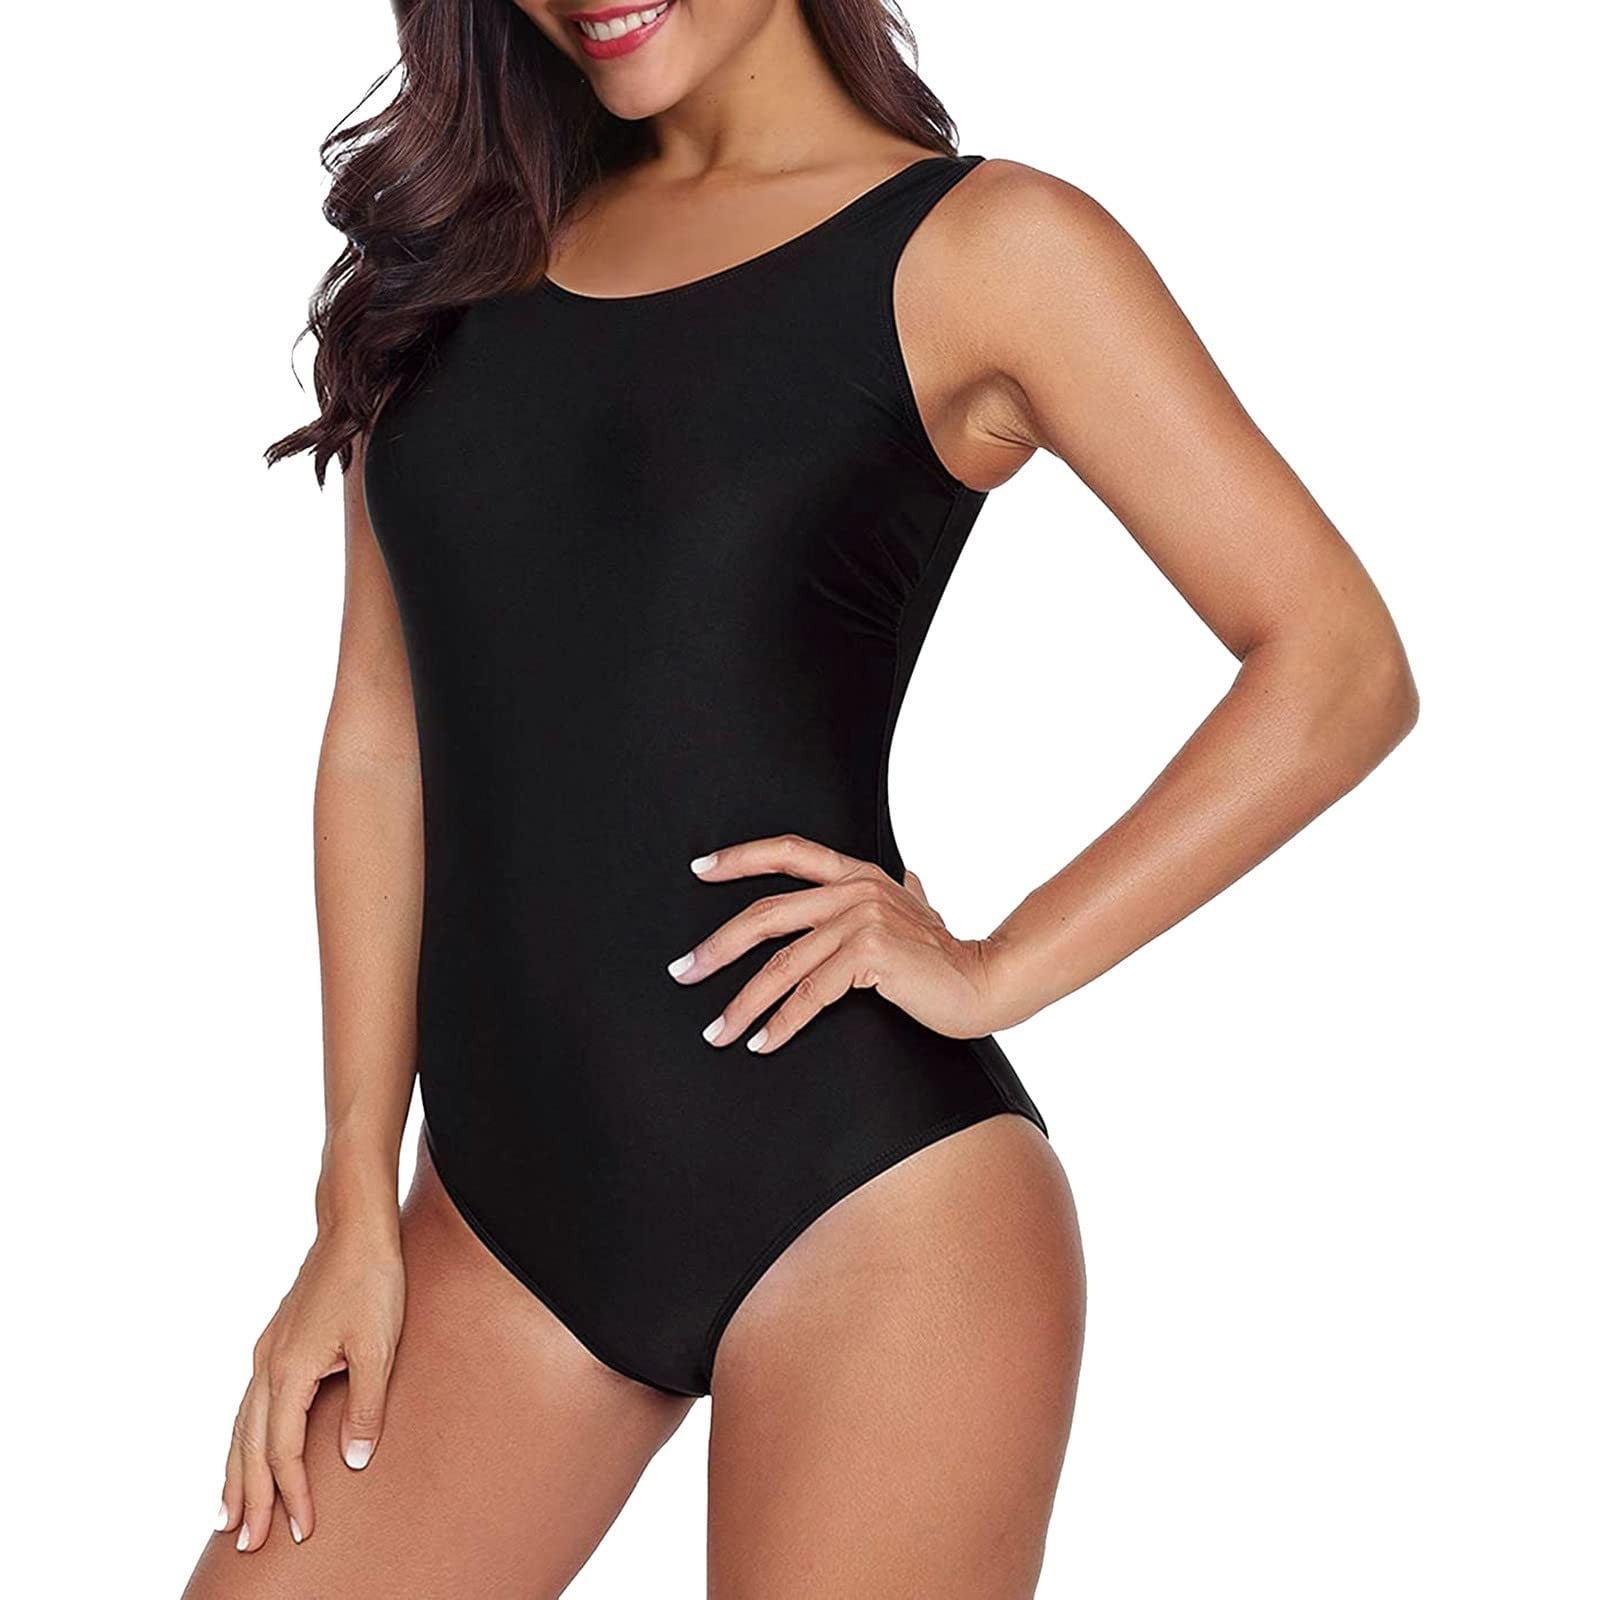 Ruched-side balconette At Twik, Simons, Shop balconette swimsuit tops  online